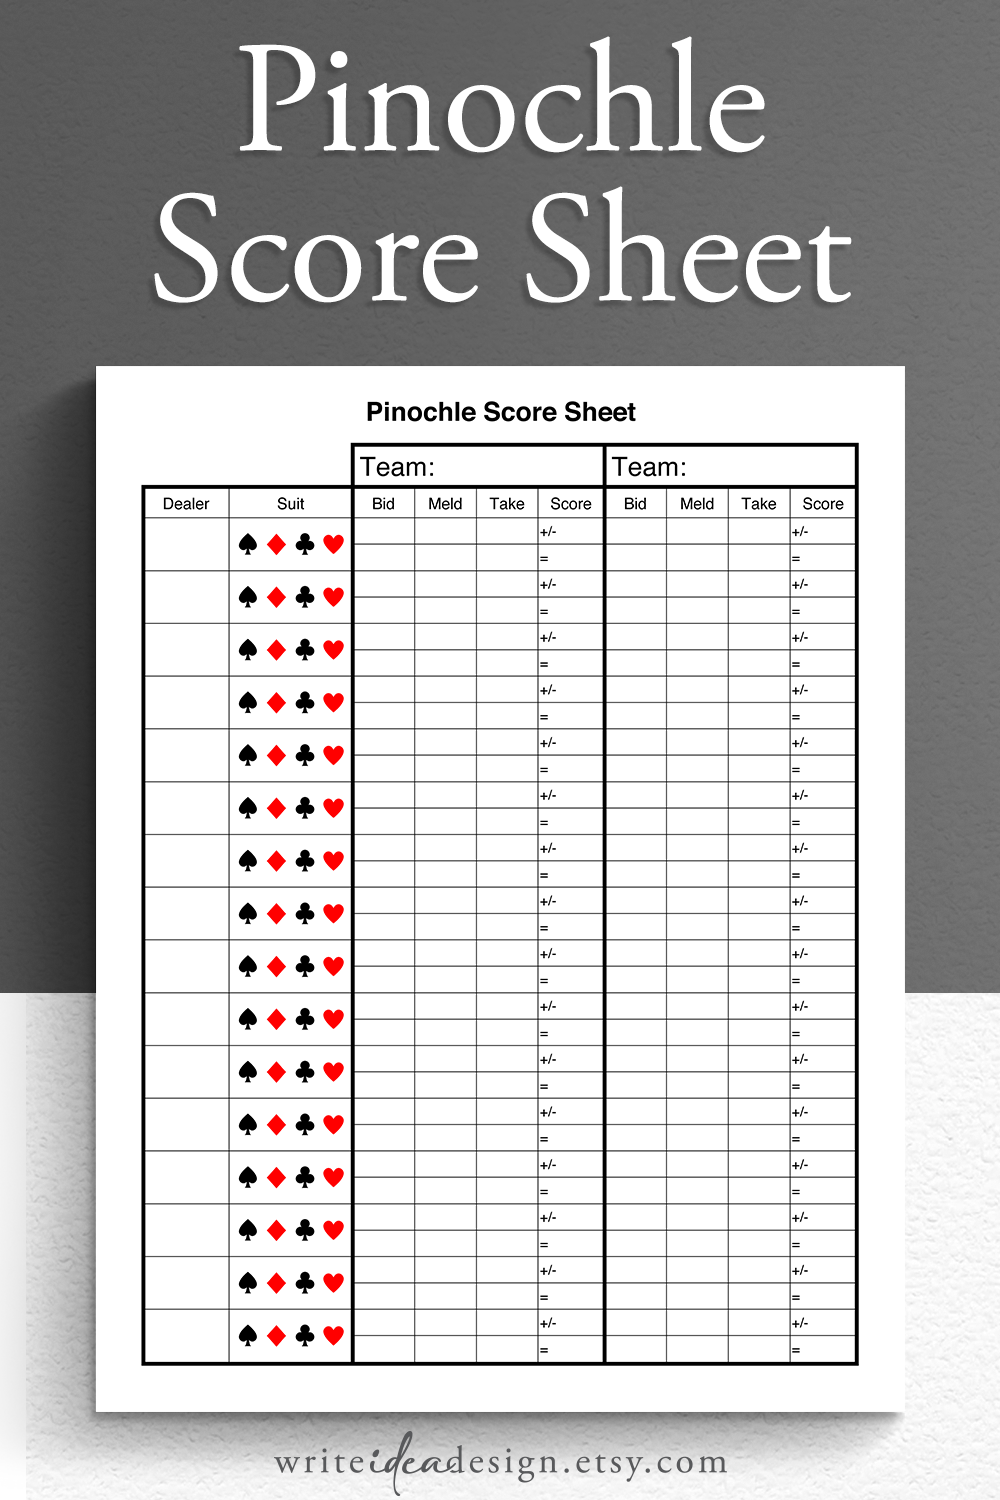 Pinochle Score Card Printable Pinochle Score Sheet Pinochle Score Pad Pinochle Game Pinochle Scoring Etsy Printed Cards Medication Organization Yahtzee Score Card